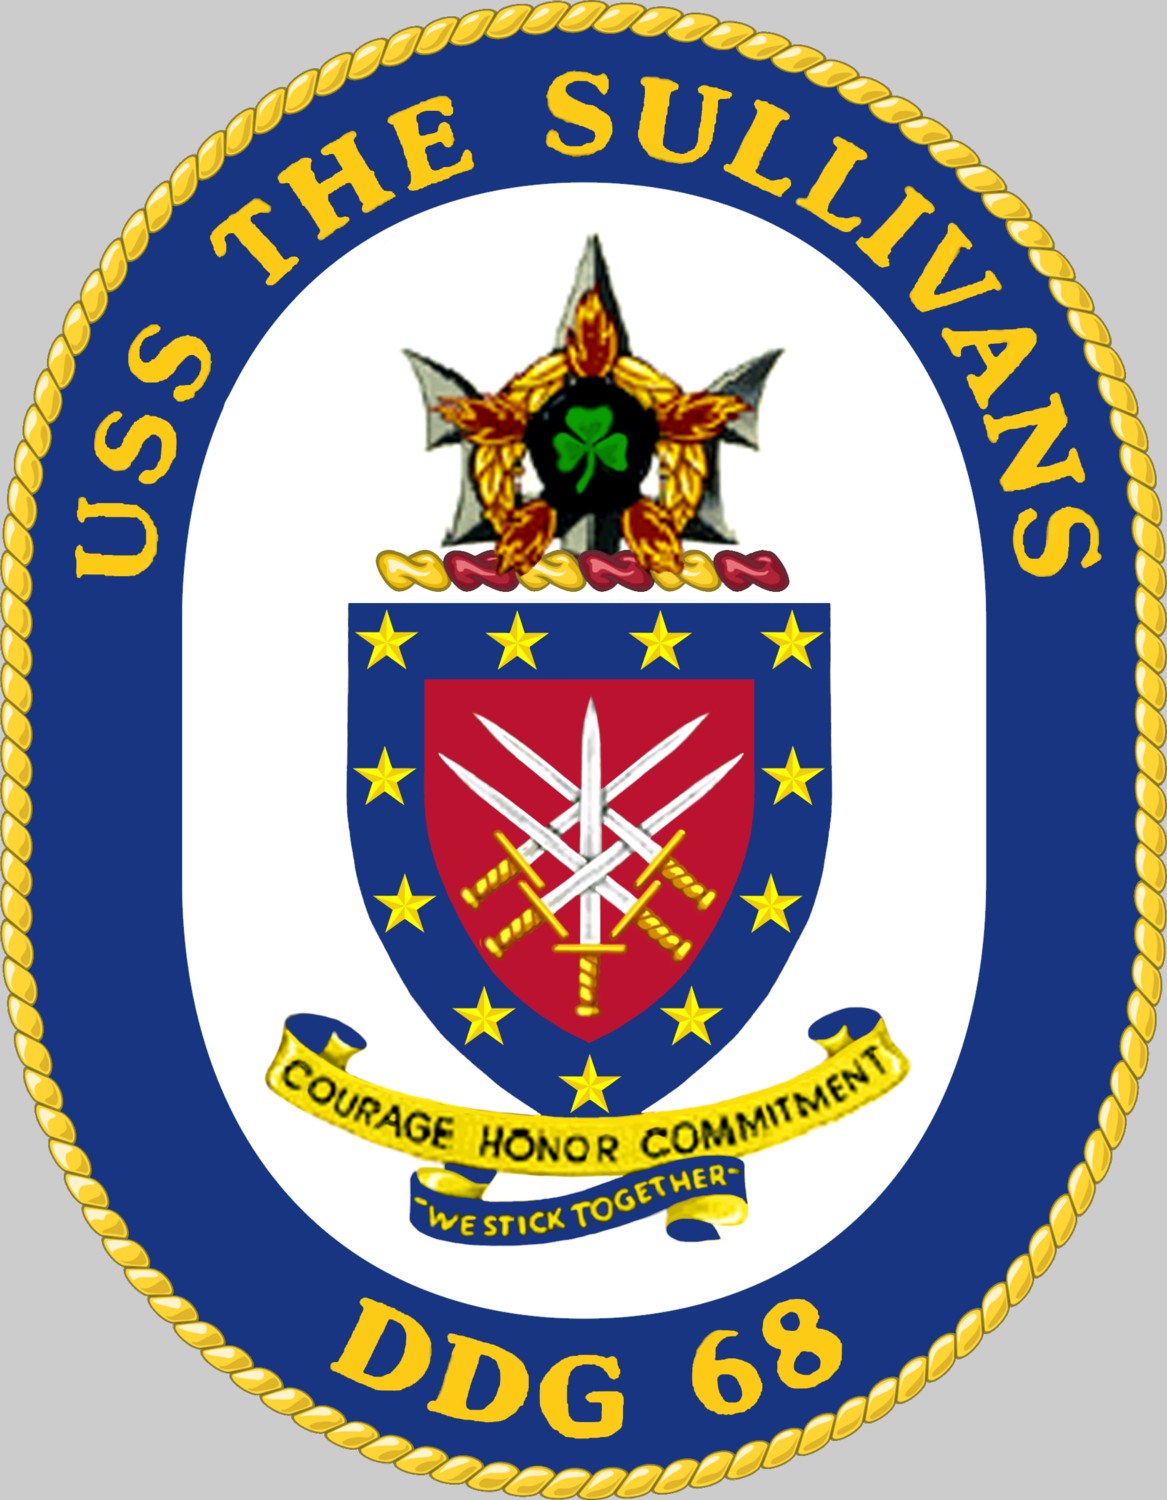 ddg-68 uss the sullivans insignia crest patch badge destroyer us navy 02c